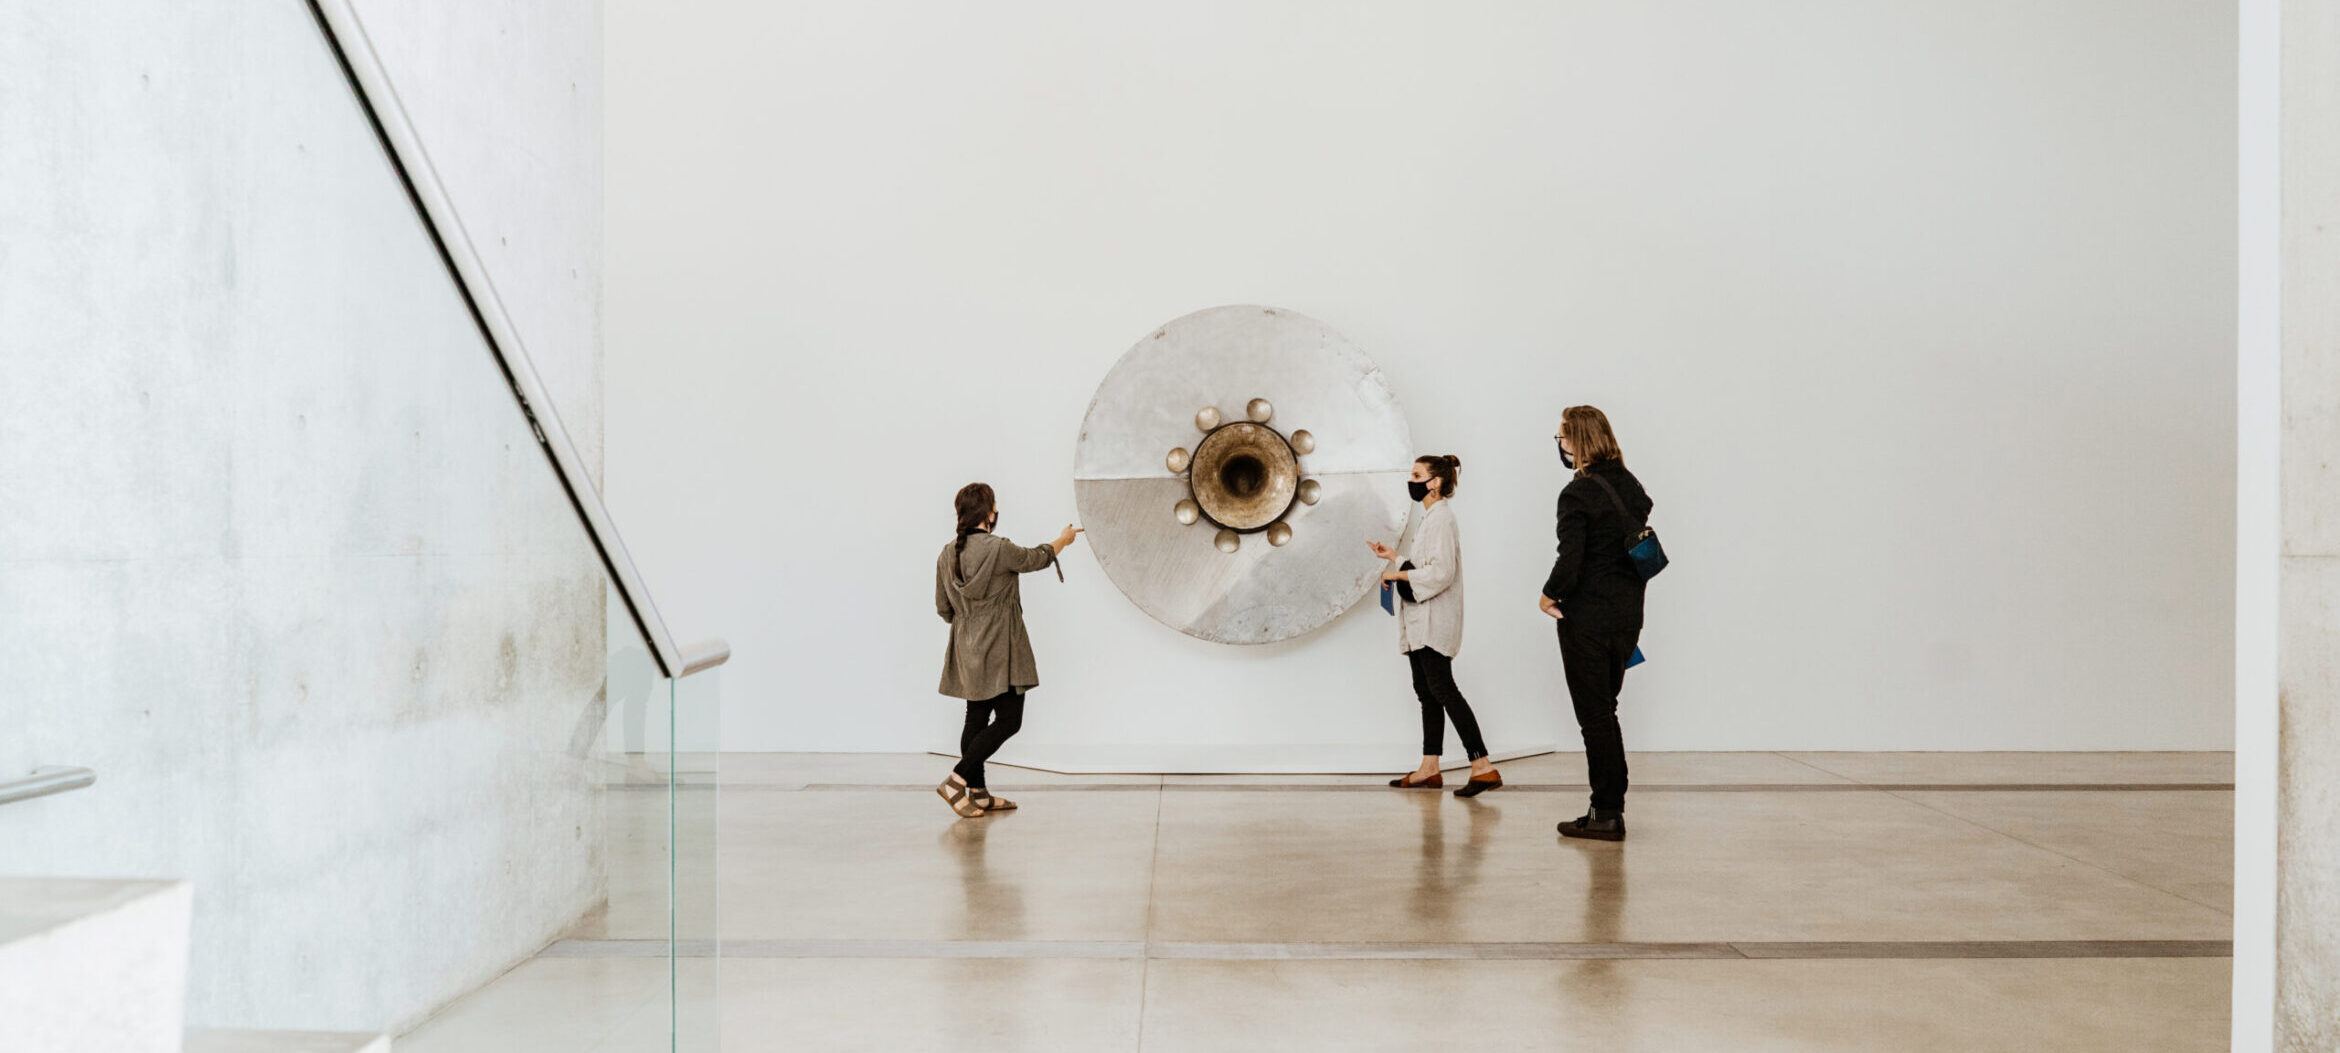 Three individuals looking at circular metallic sculpture from "Terry Adkins: Resounding."